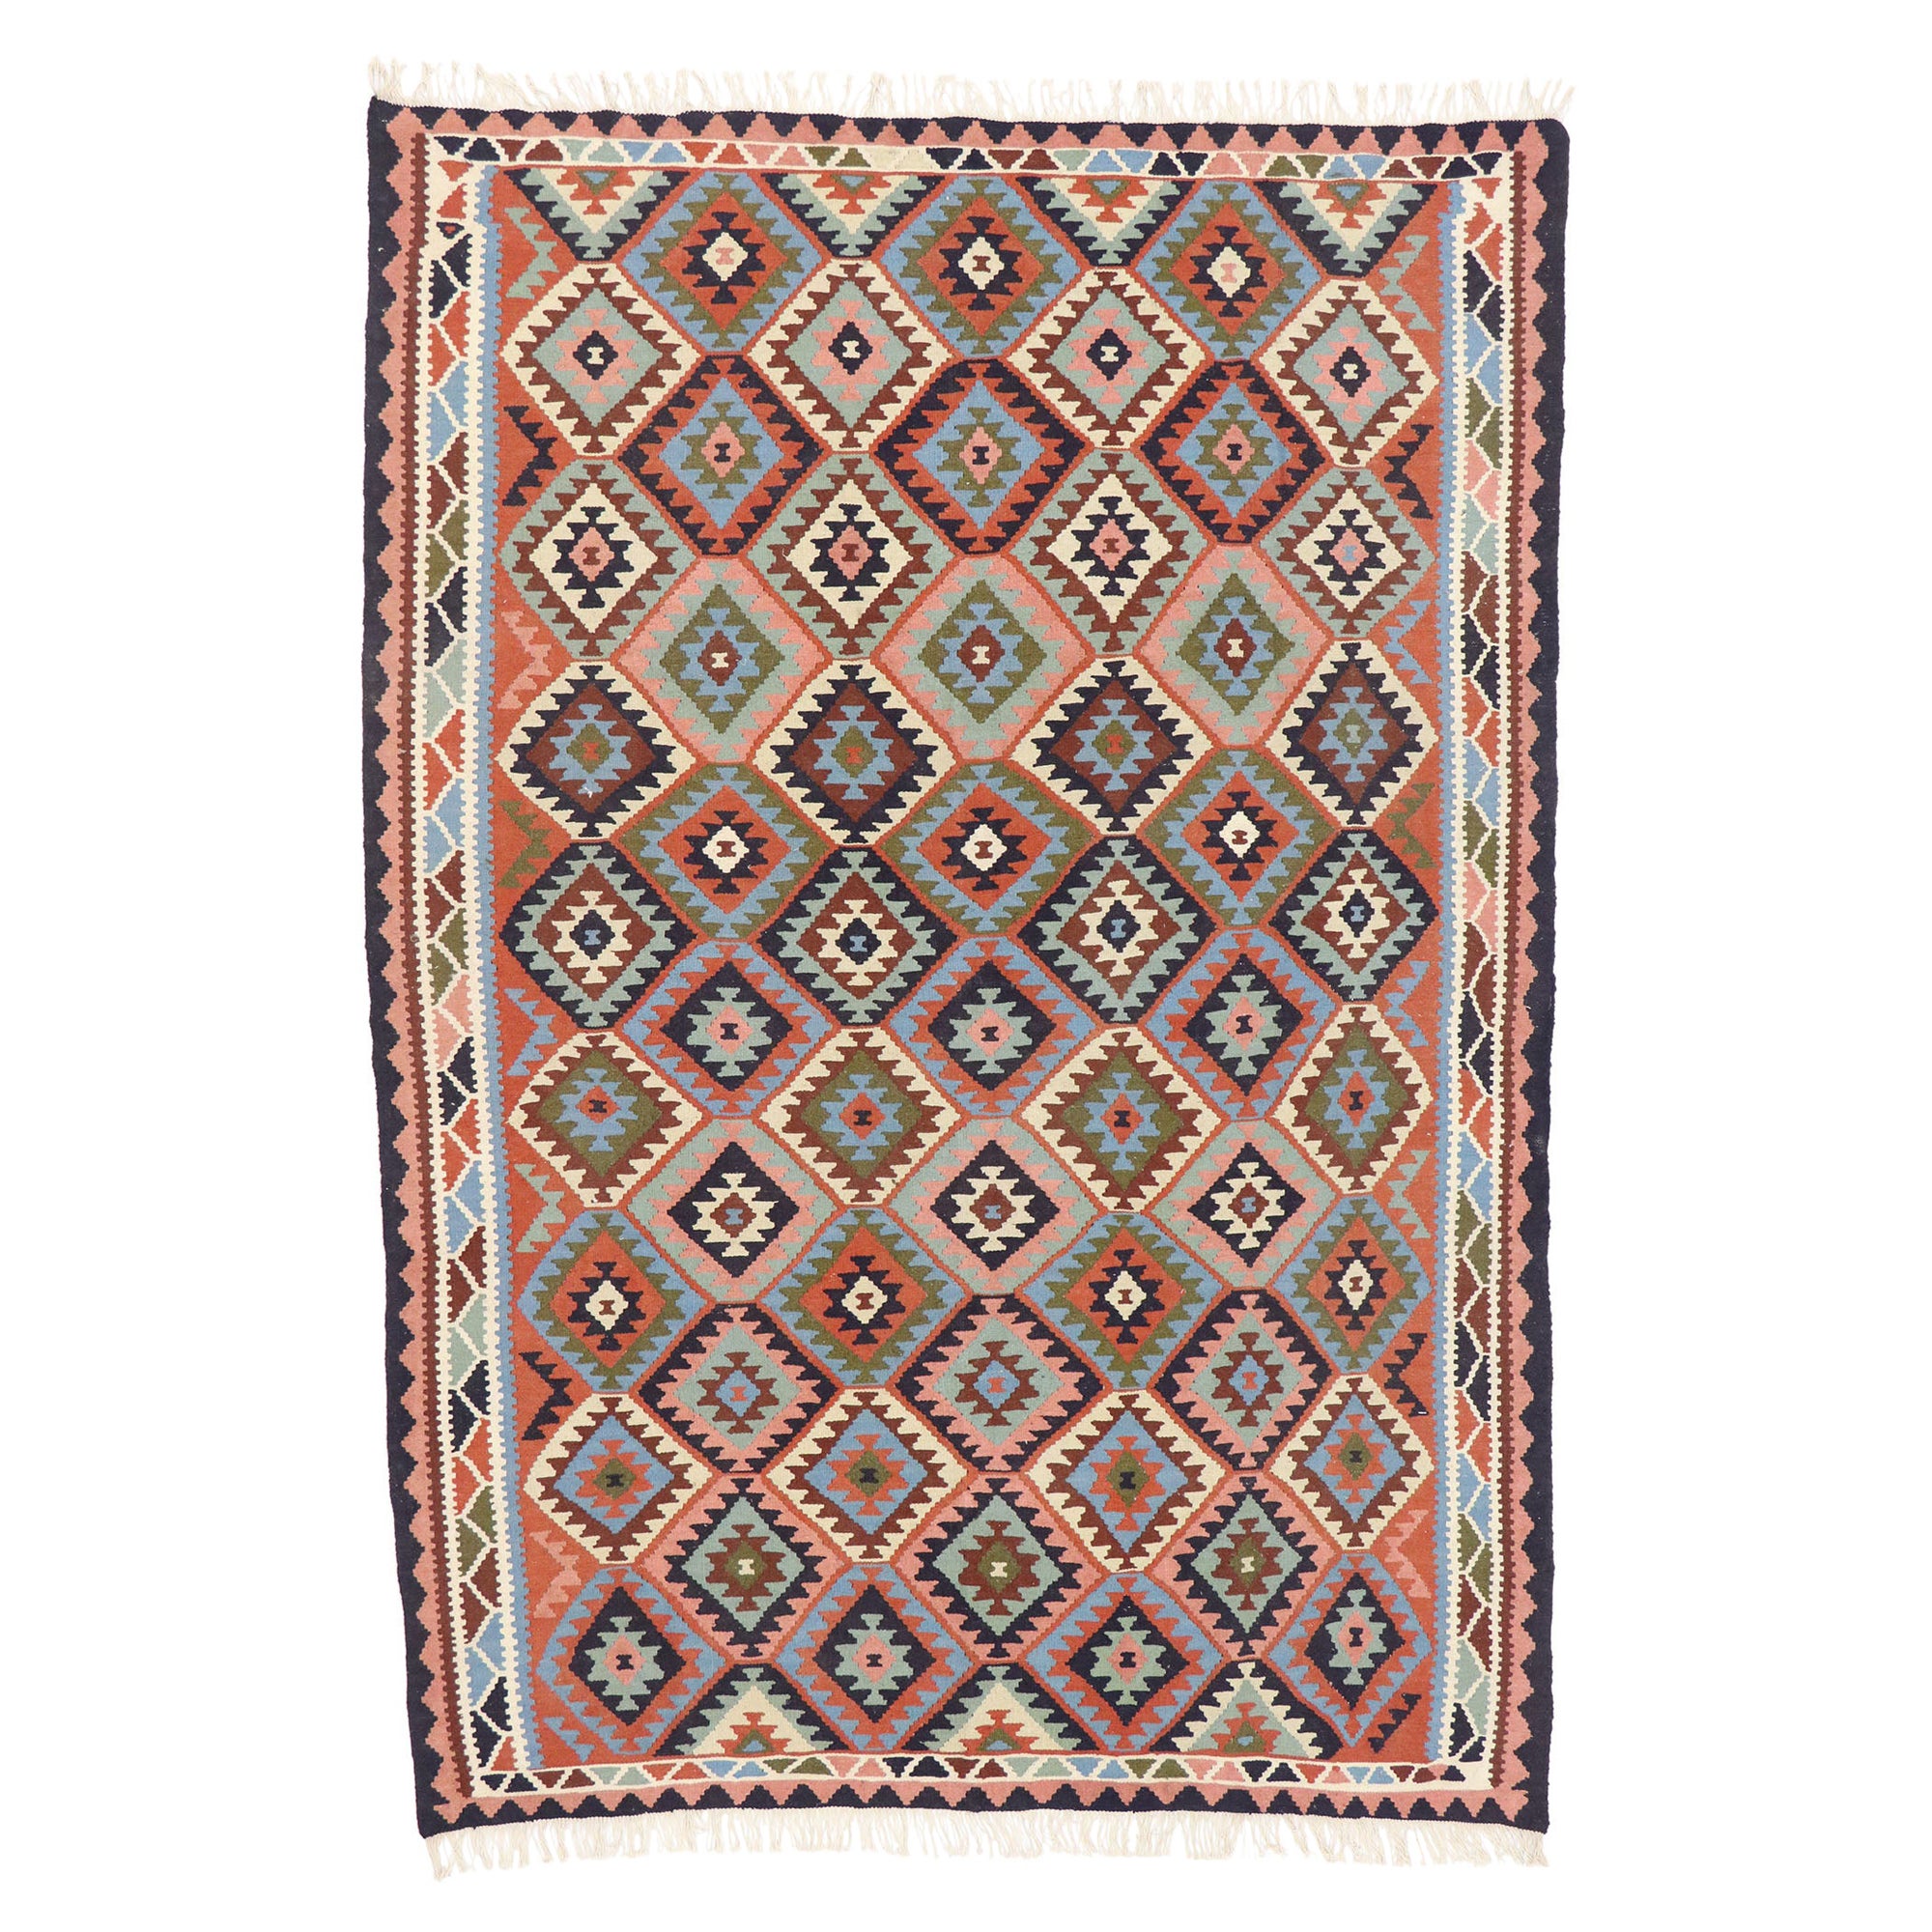 Vintage Persian Shiraz Kilim Rug with Southwestern Tribal Style